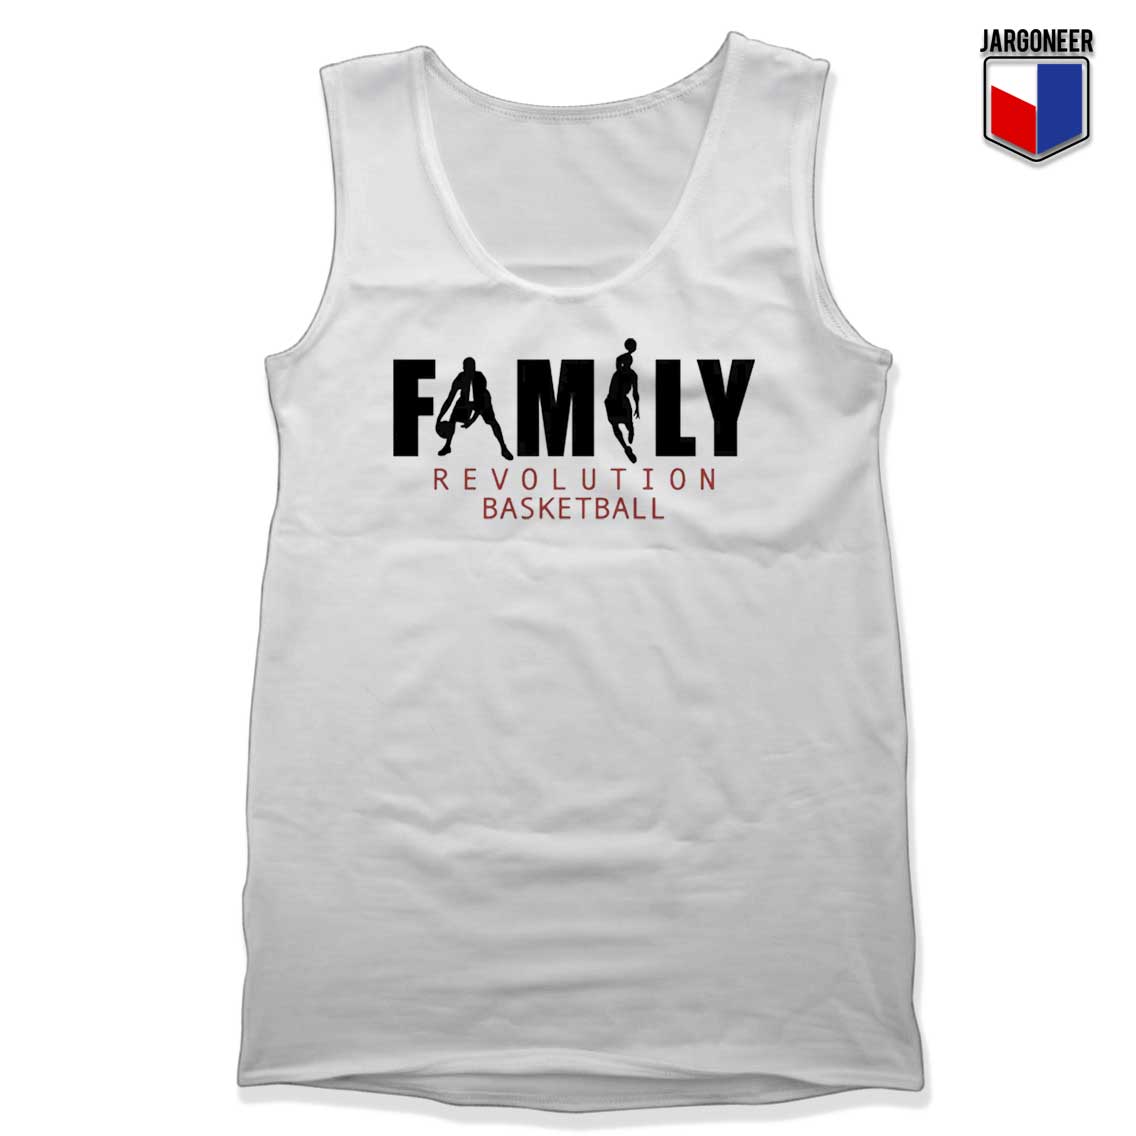 Family Revolution Basketball Tank Top - Shop Unique Graphic Cool Shirt Designs